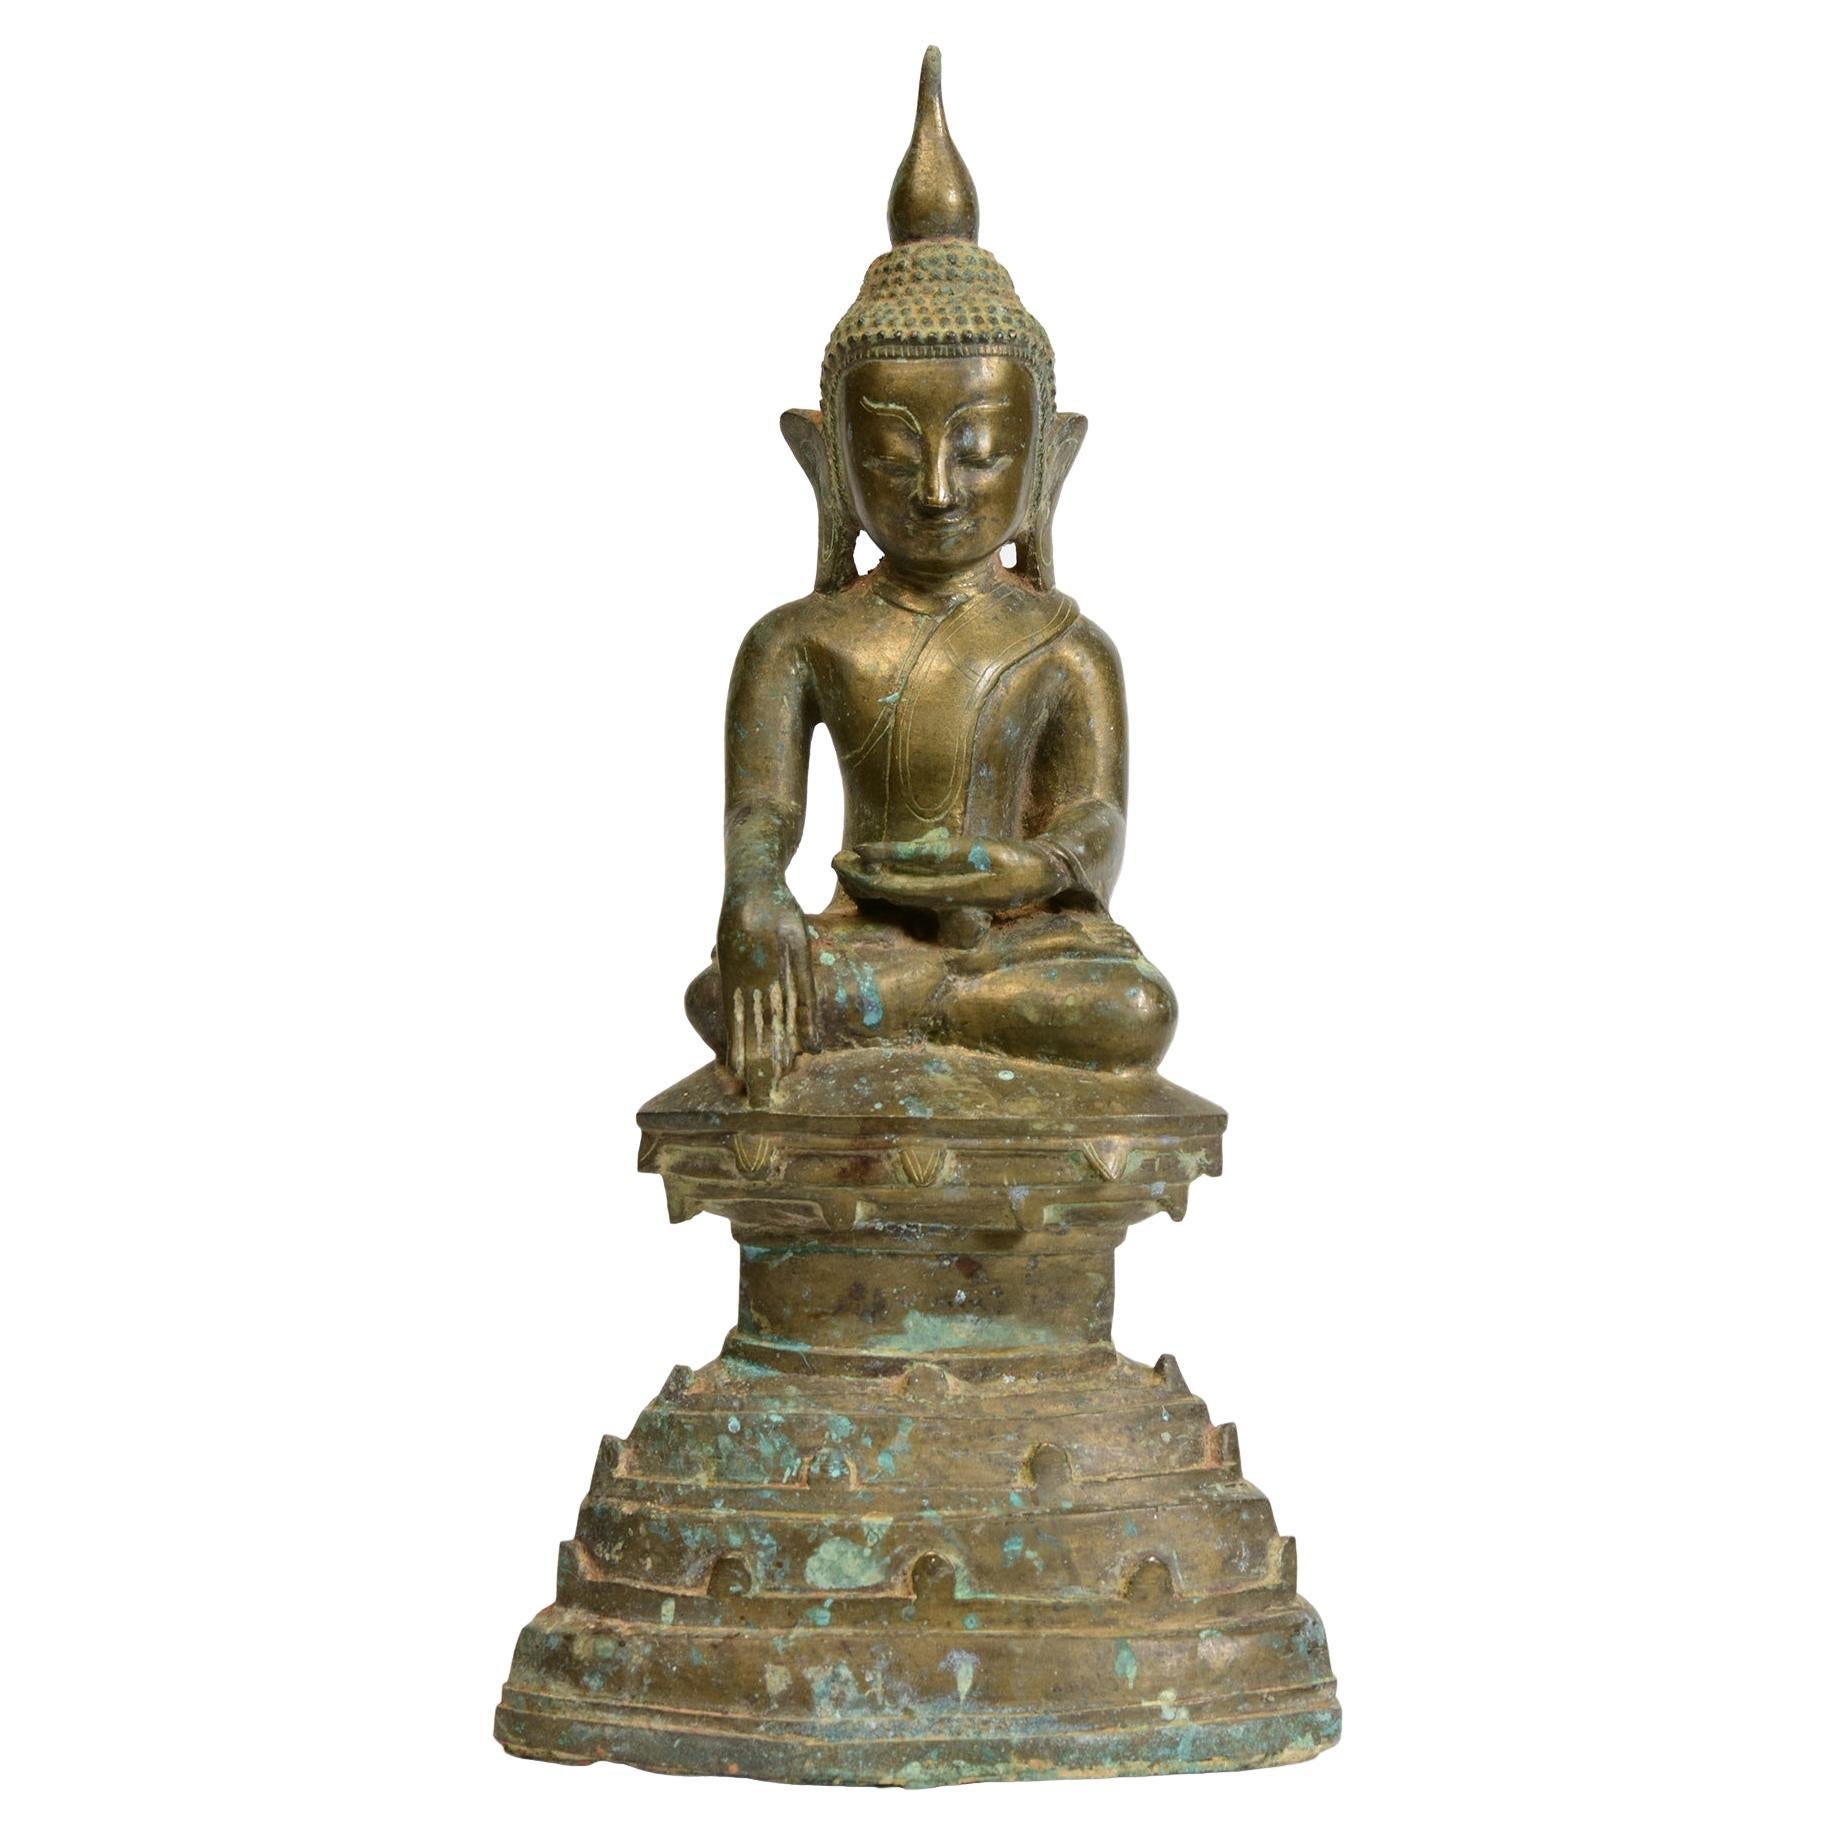 Bouddha assis en bronze birman ancien du 17ème siècle, Early Shan